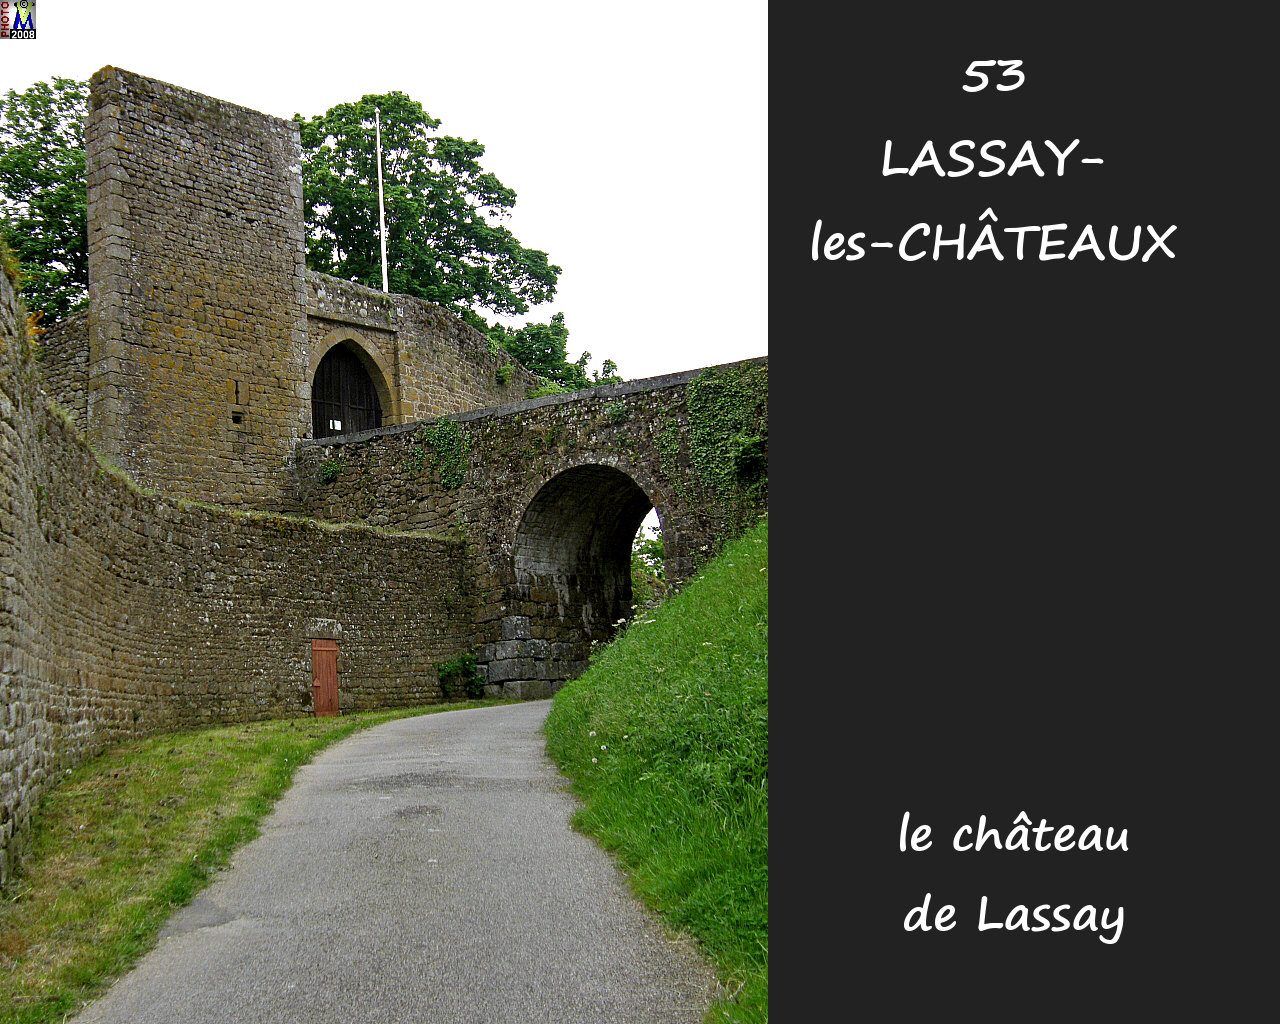 53LASSAY-CHATEAUX_chateauL_108.jpg